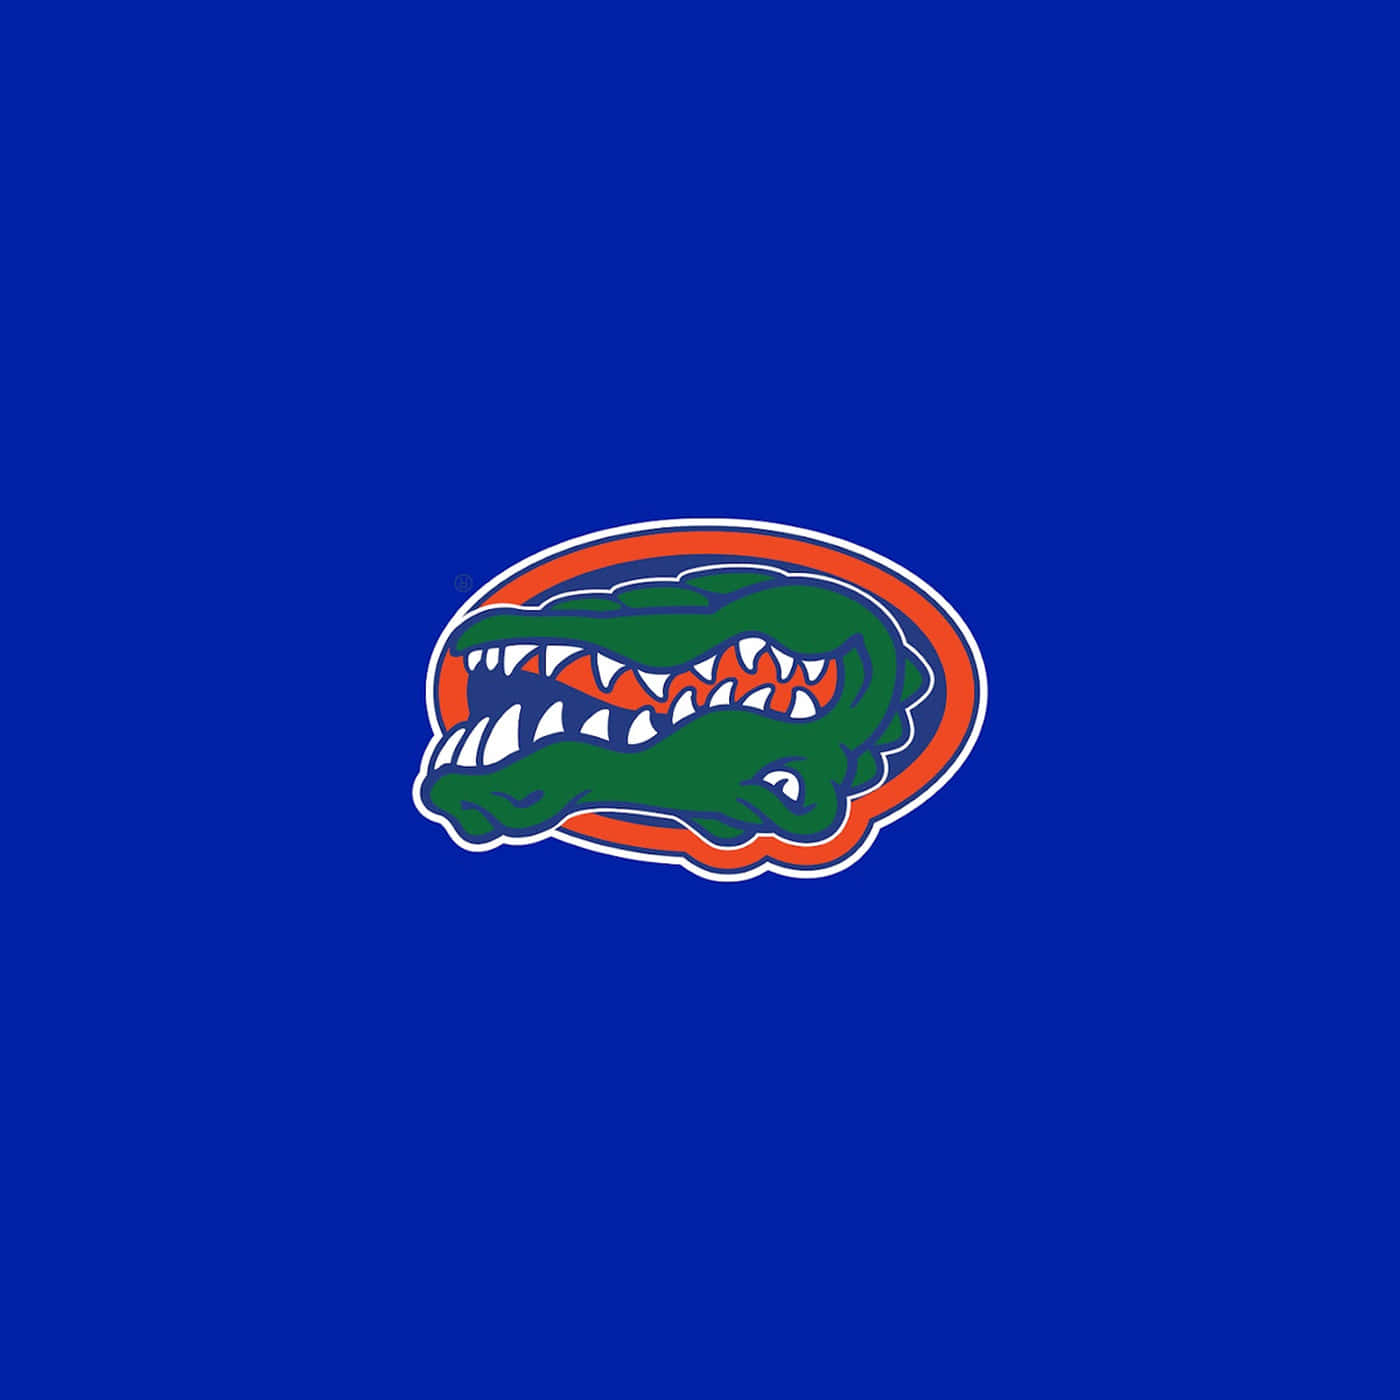 The Florida Gators Logo On A Blue Background Wallpaper